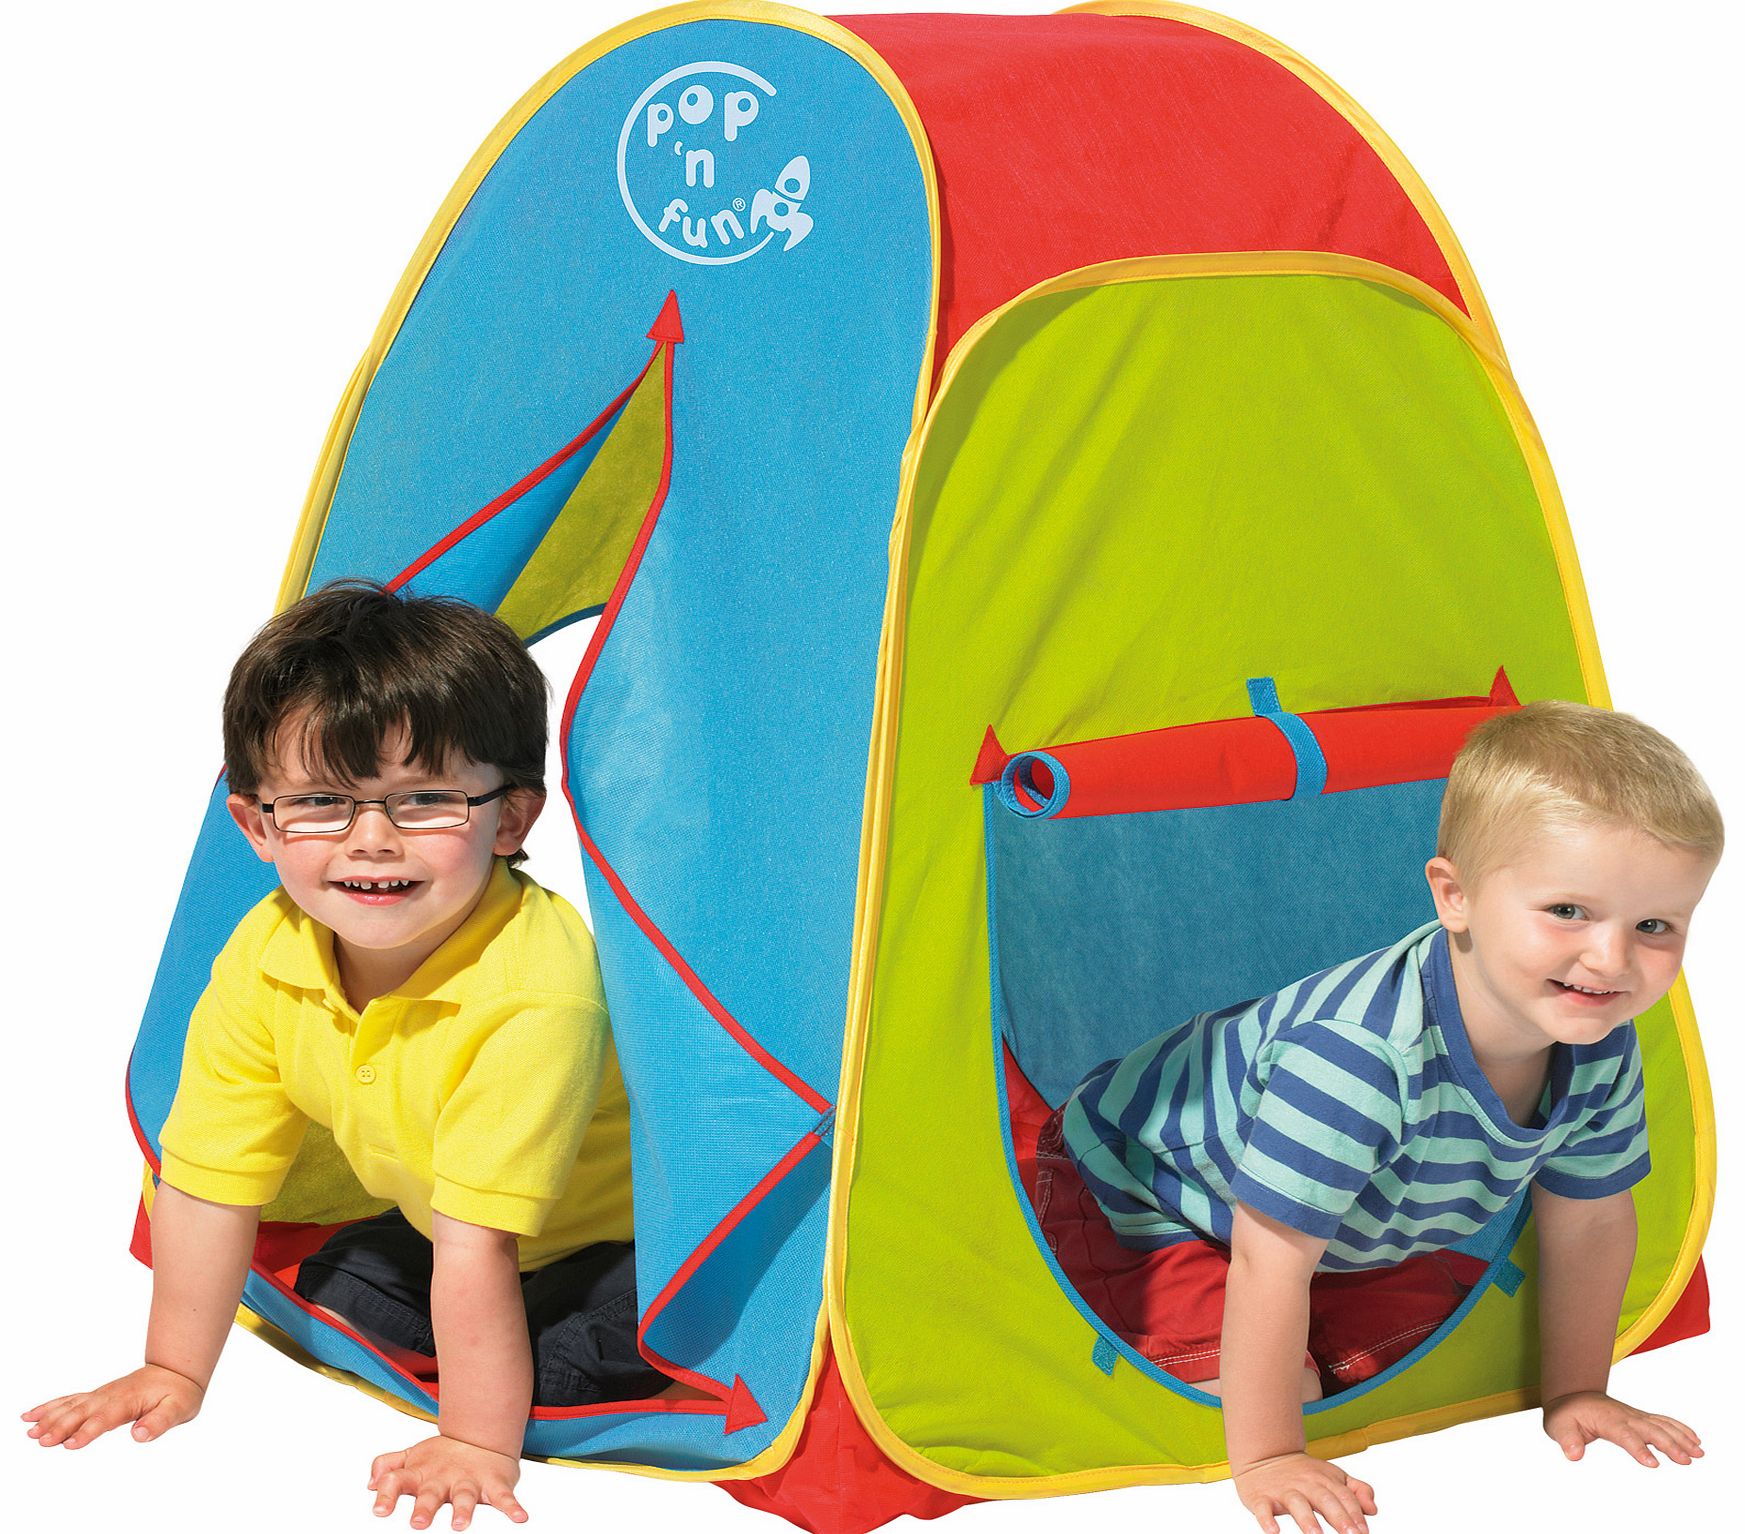 generic pop-up tent